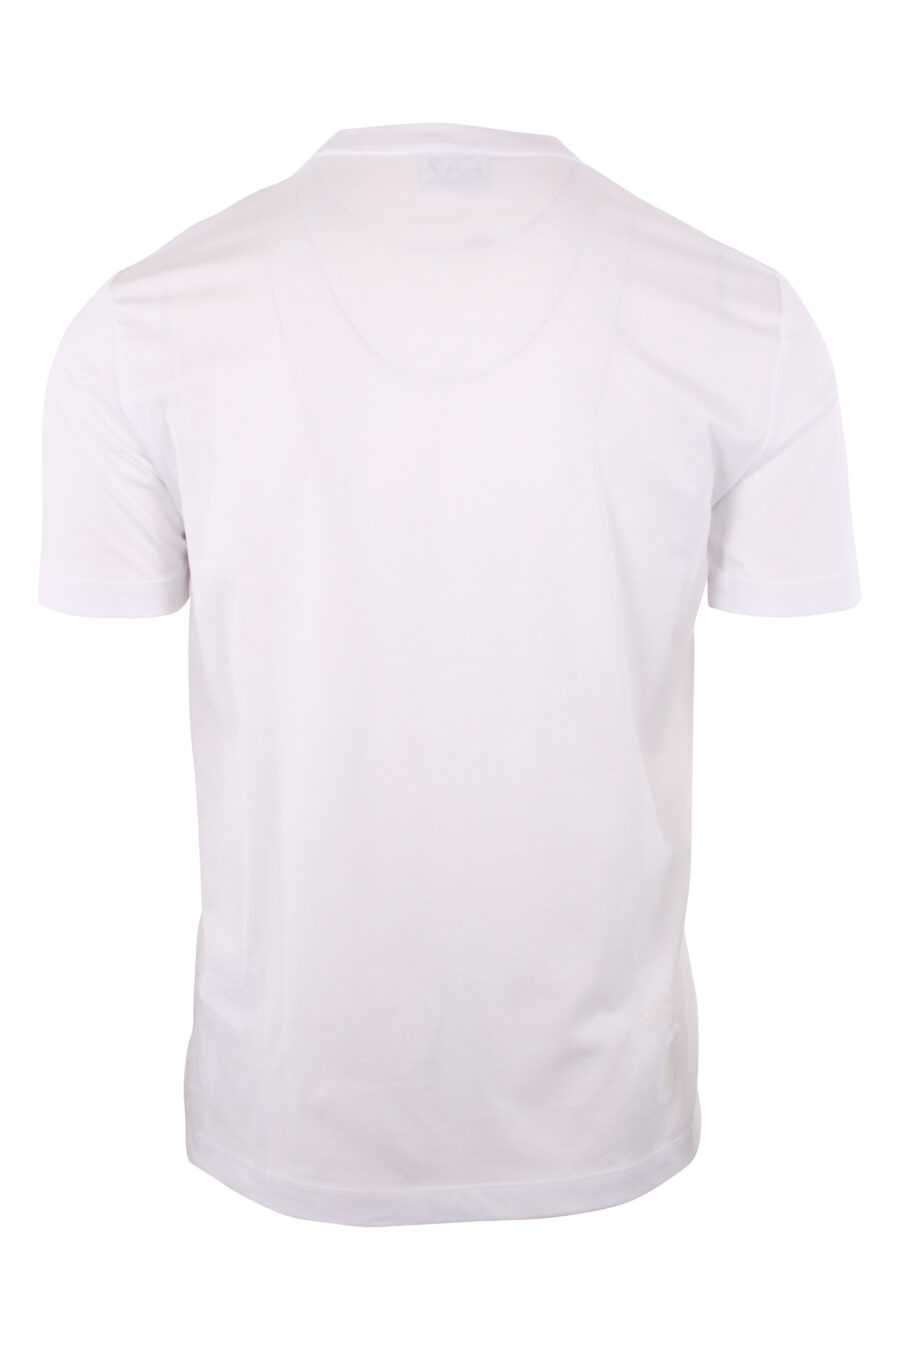 T-shirt branca com maxilogo preto "lux identity" - IMG 2007